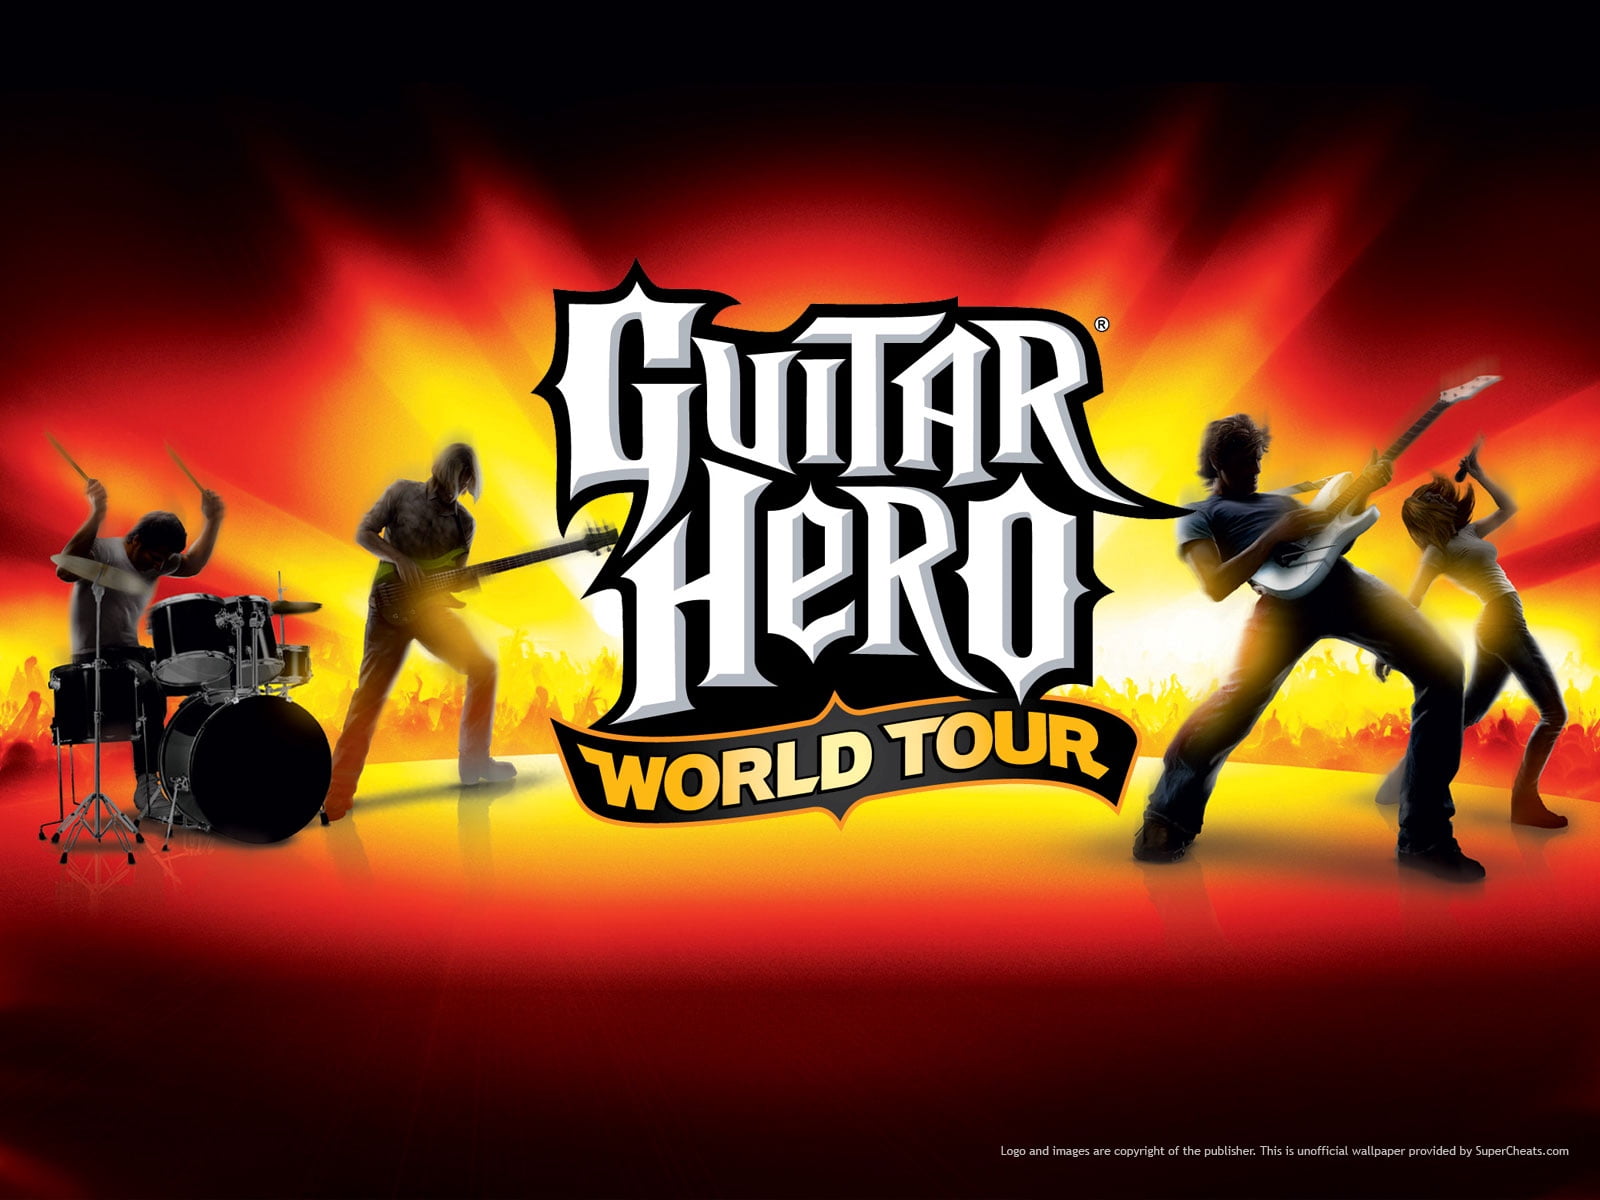 Guitar Hero World Tour digital wallpaper, harmonix music systems